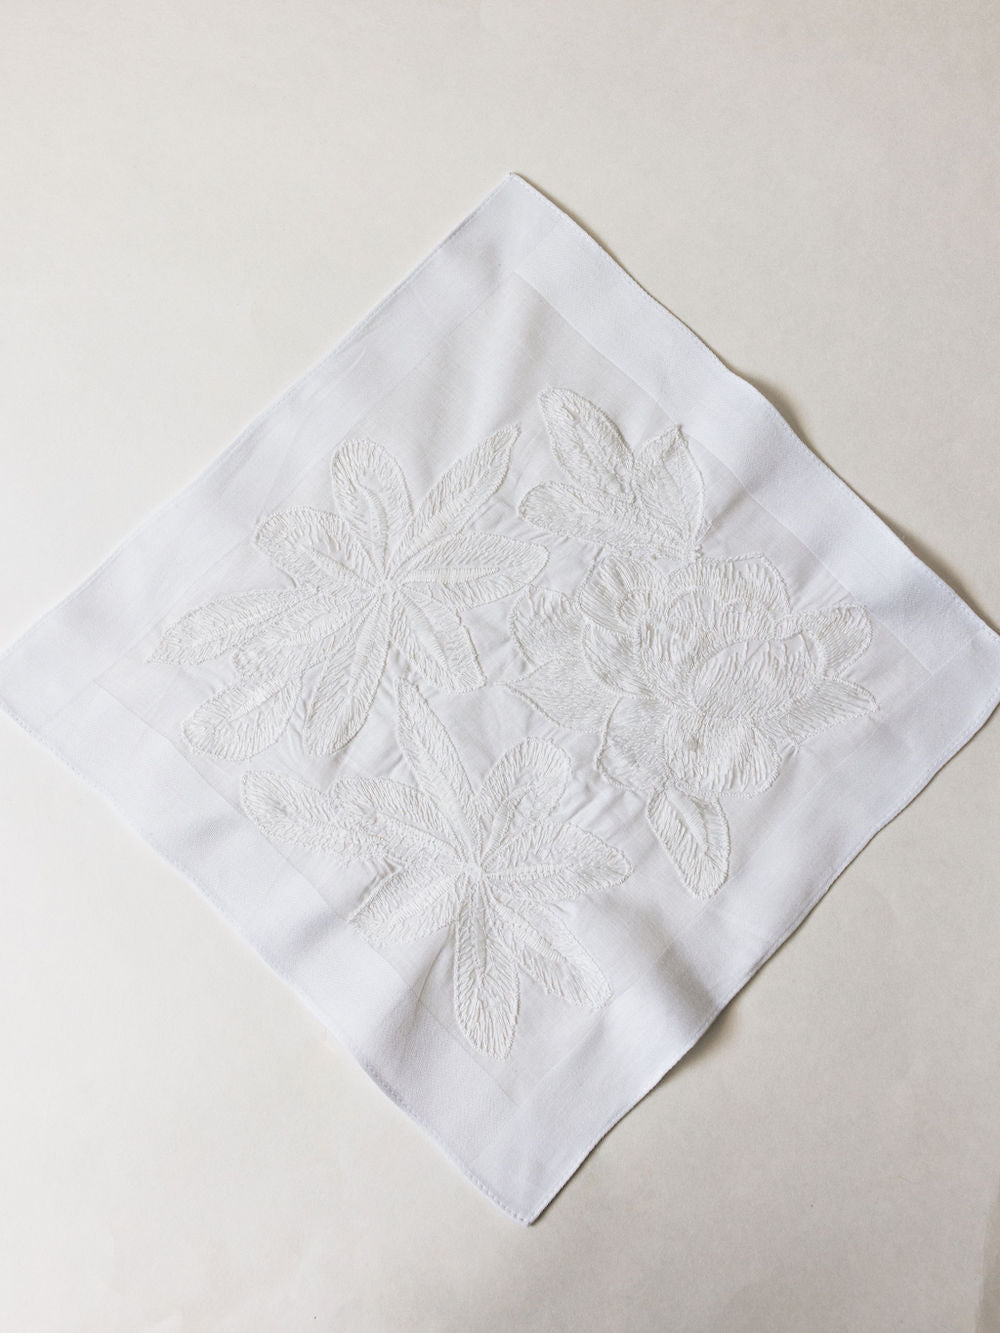 handkerchief heirloom from grandmother's wedding dress handmade by wedding expert The Garter Girl